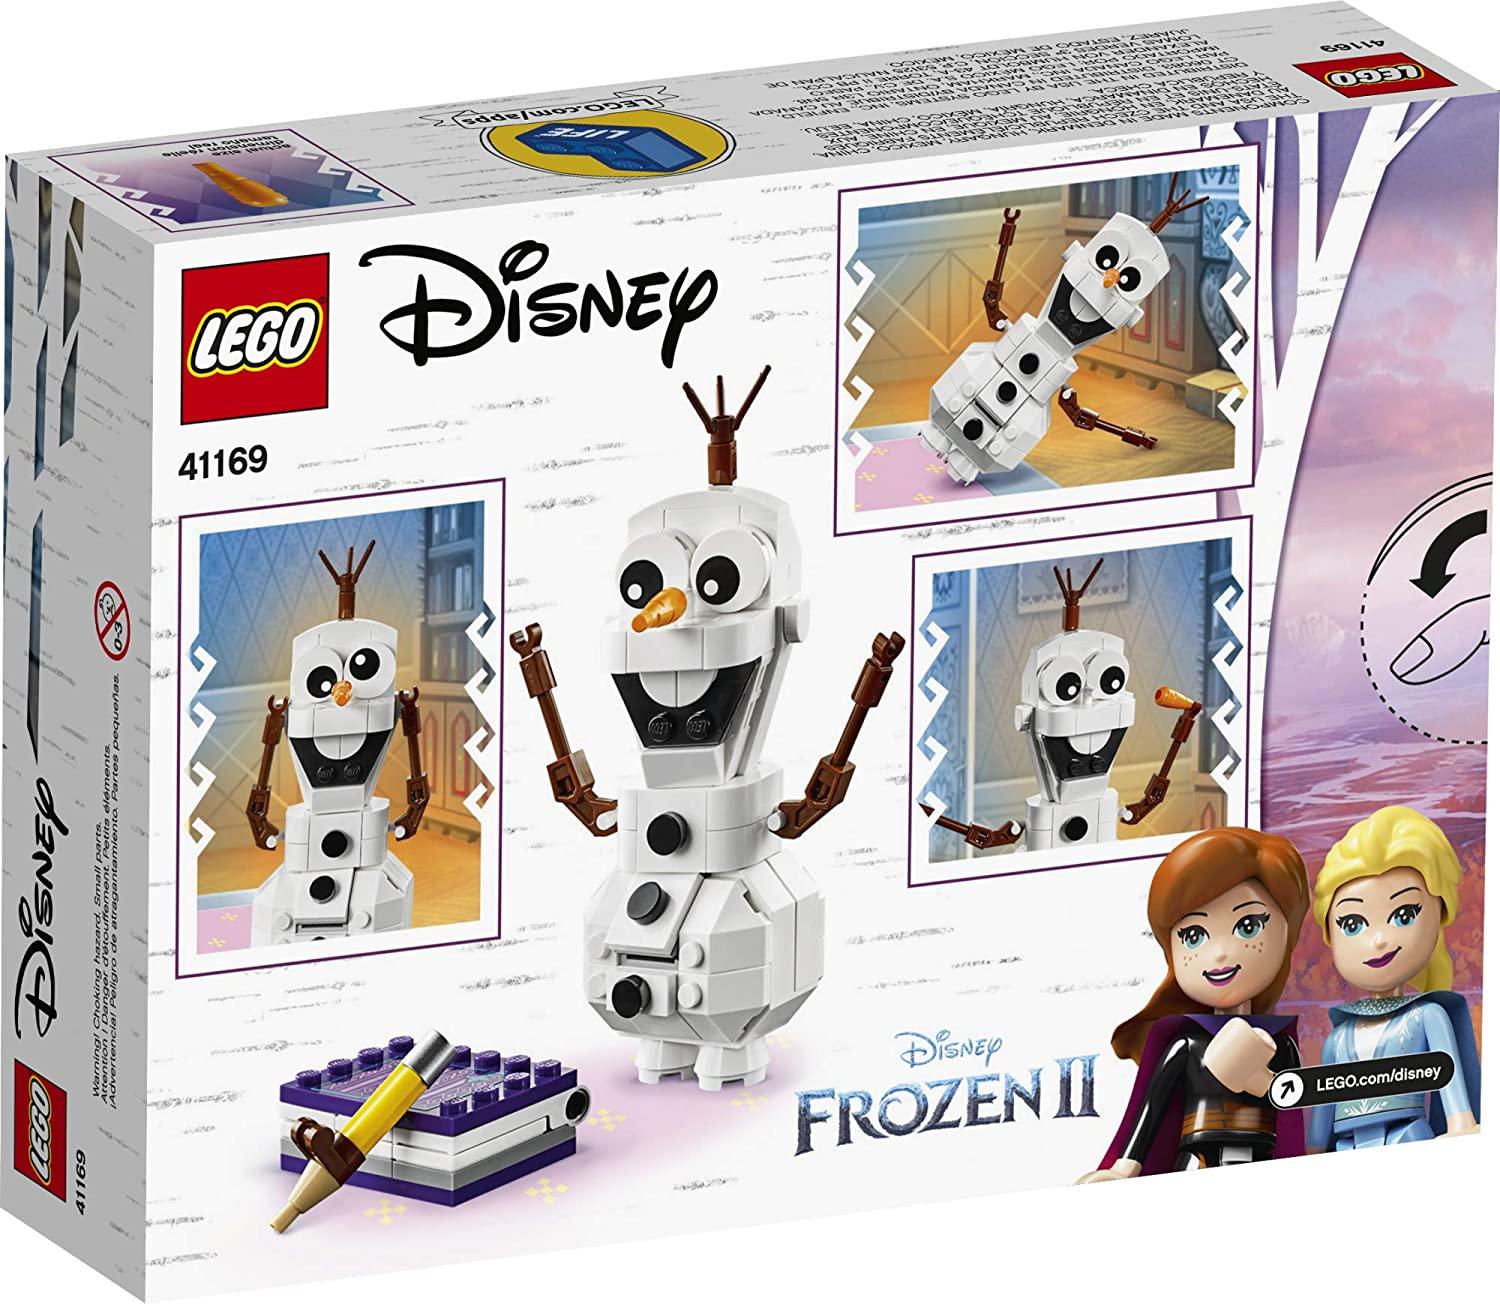 122-Piece LEGO Disney Frozen II Olaf the Snowman Toy Figure Building Kit for $7.99